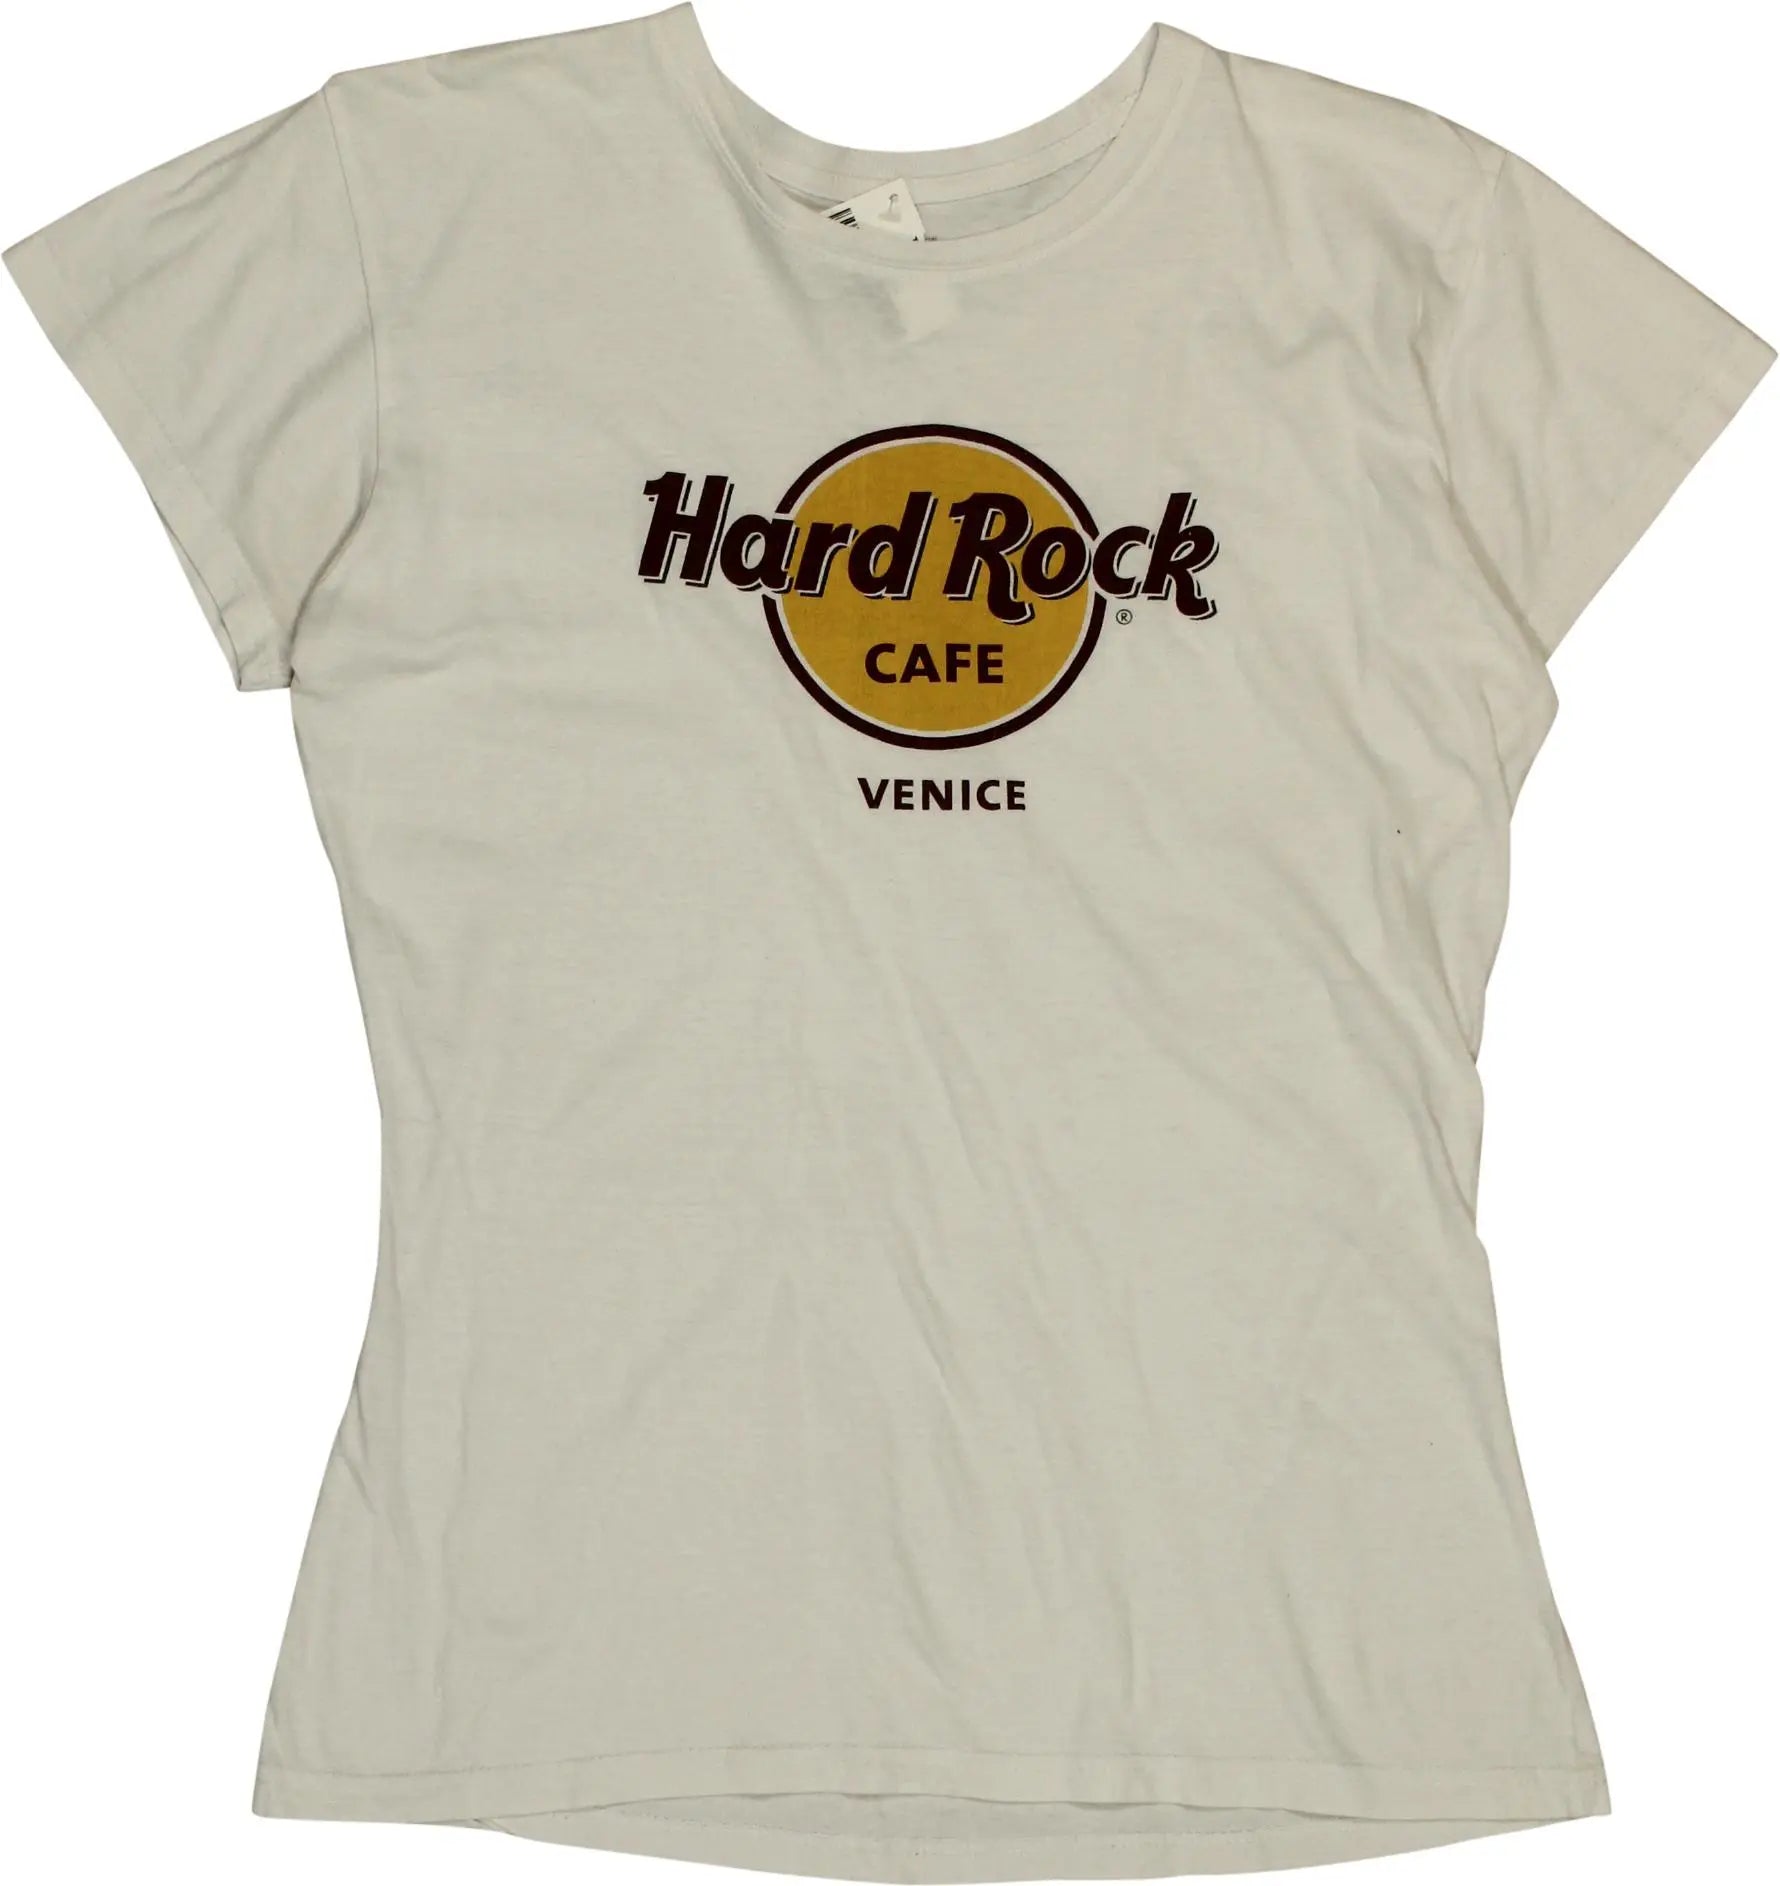 Hard Rock Cafe - Hard Rock Cafe 'Venice'- ThriftTale.com - Vintage and second handclothing